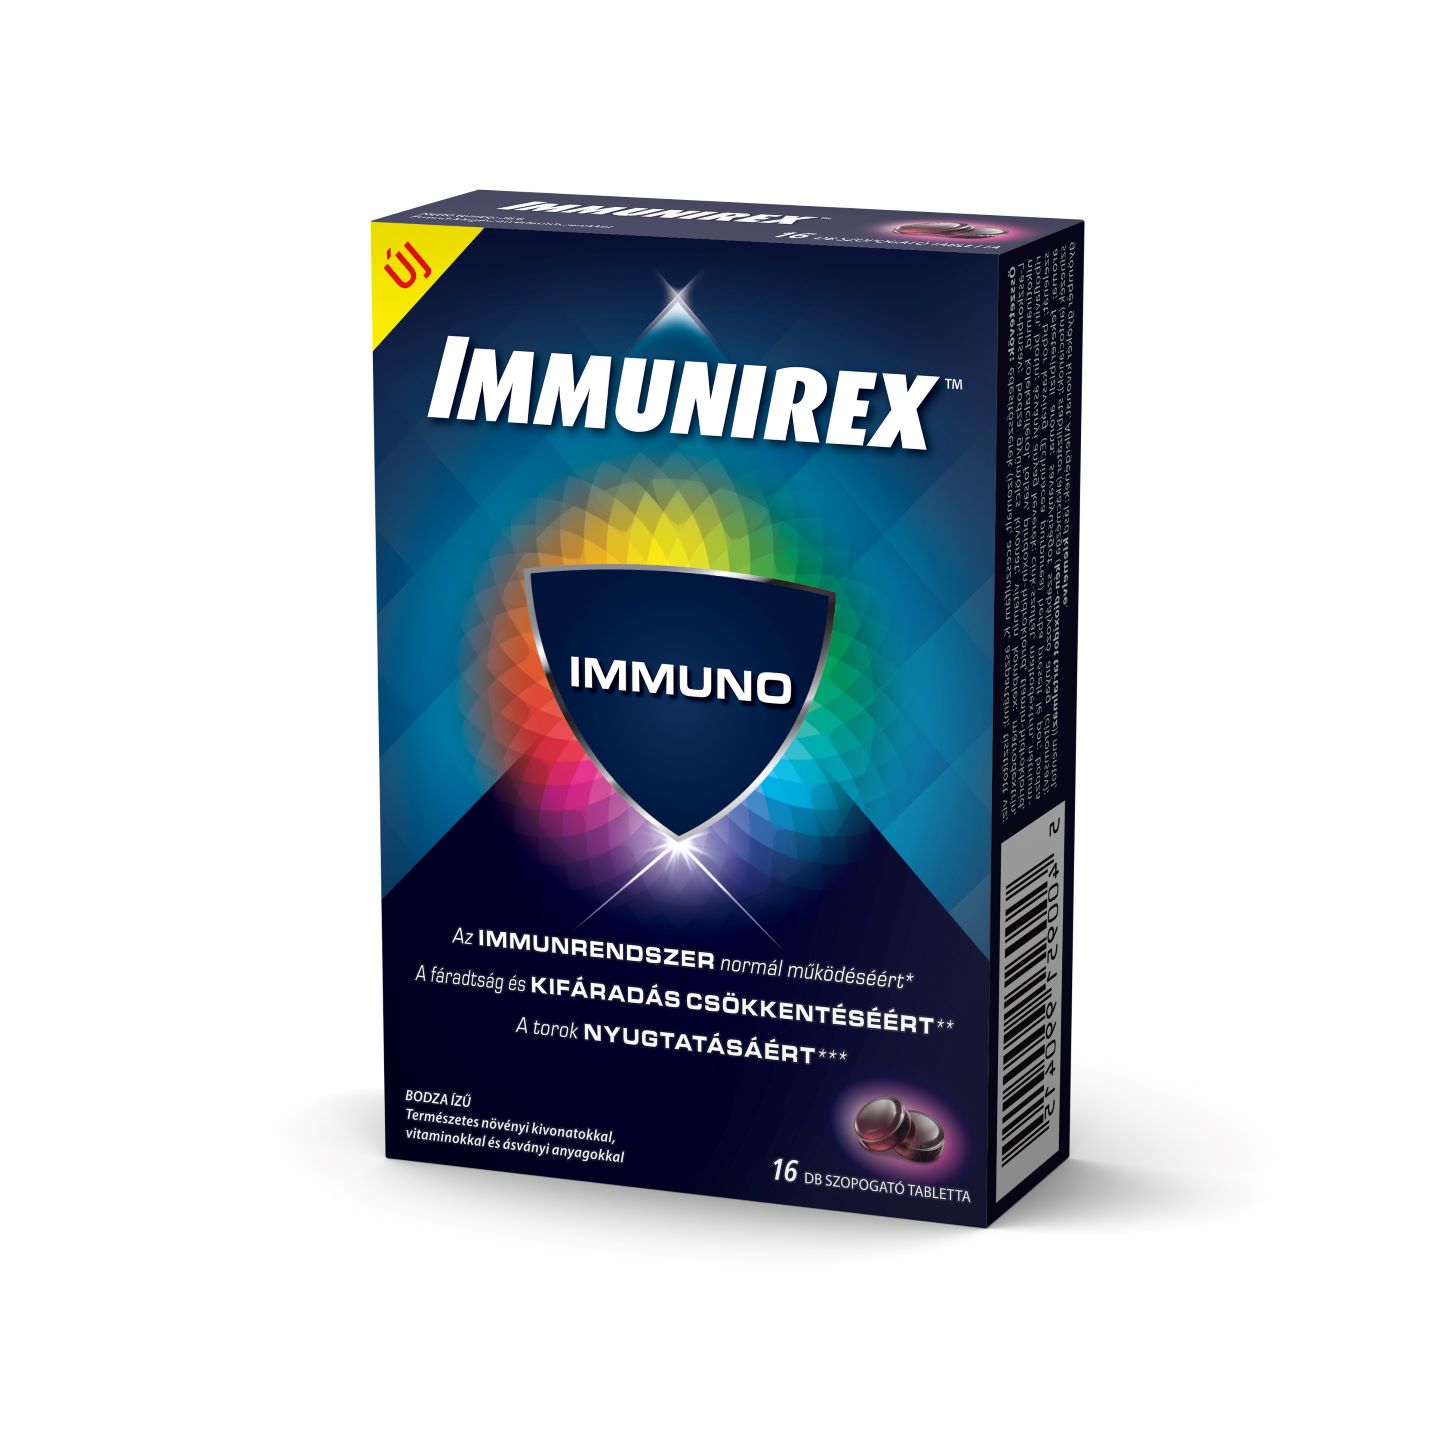 Immunirex Immuno  szopogató tabletta